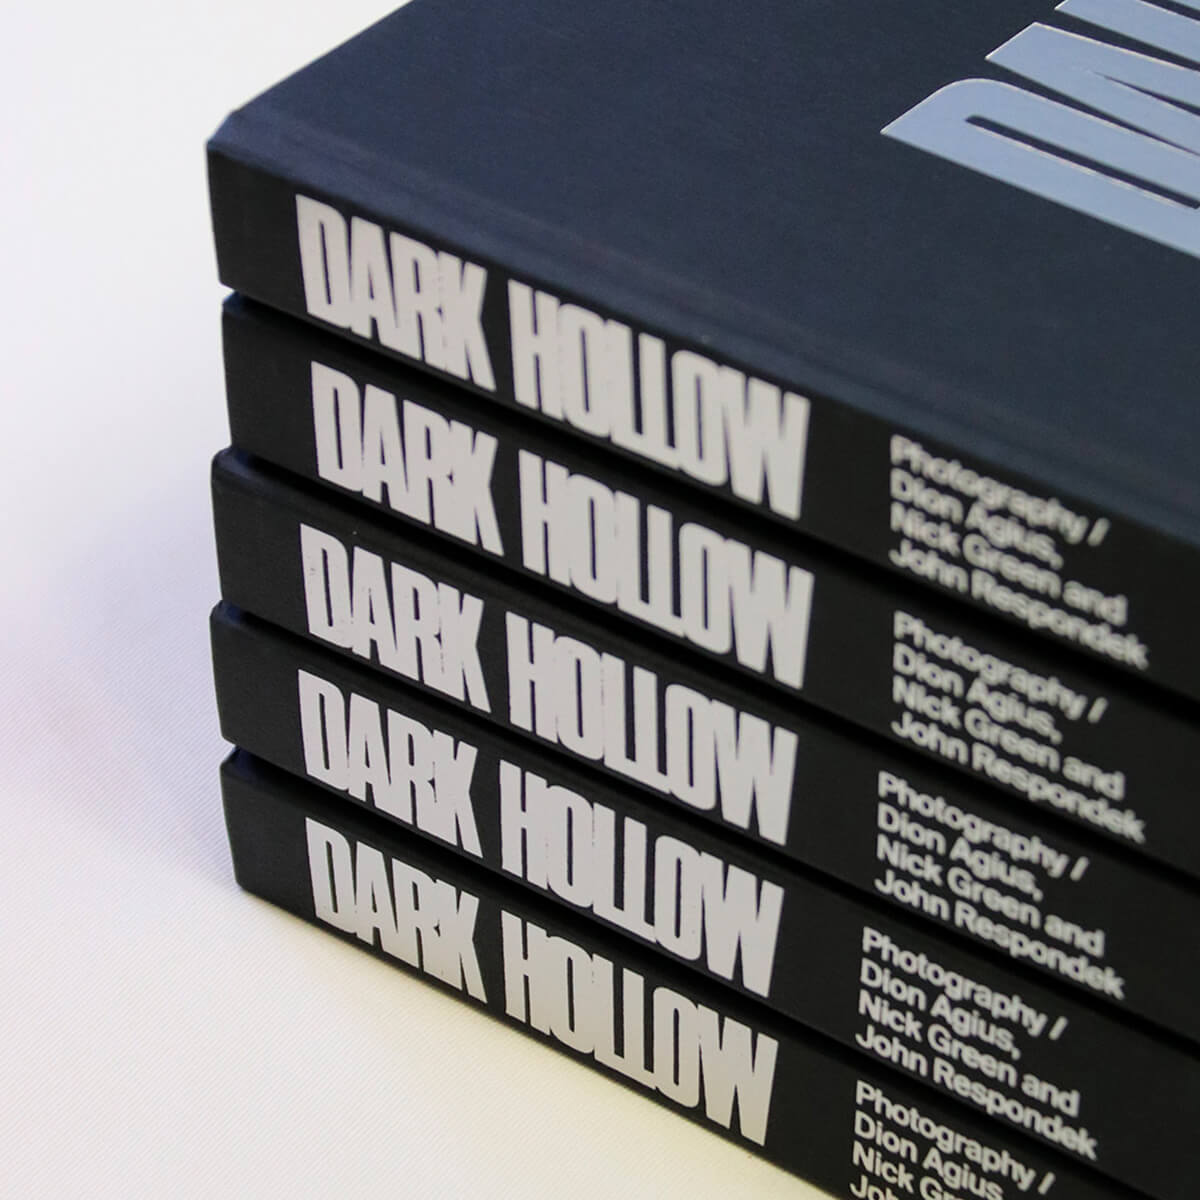 Dark Hollow Book